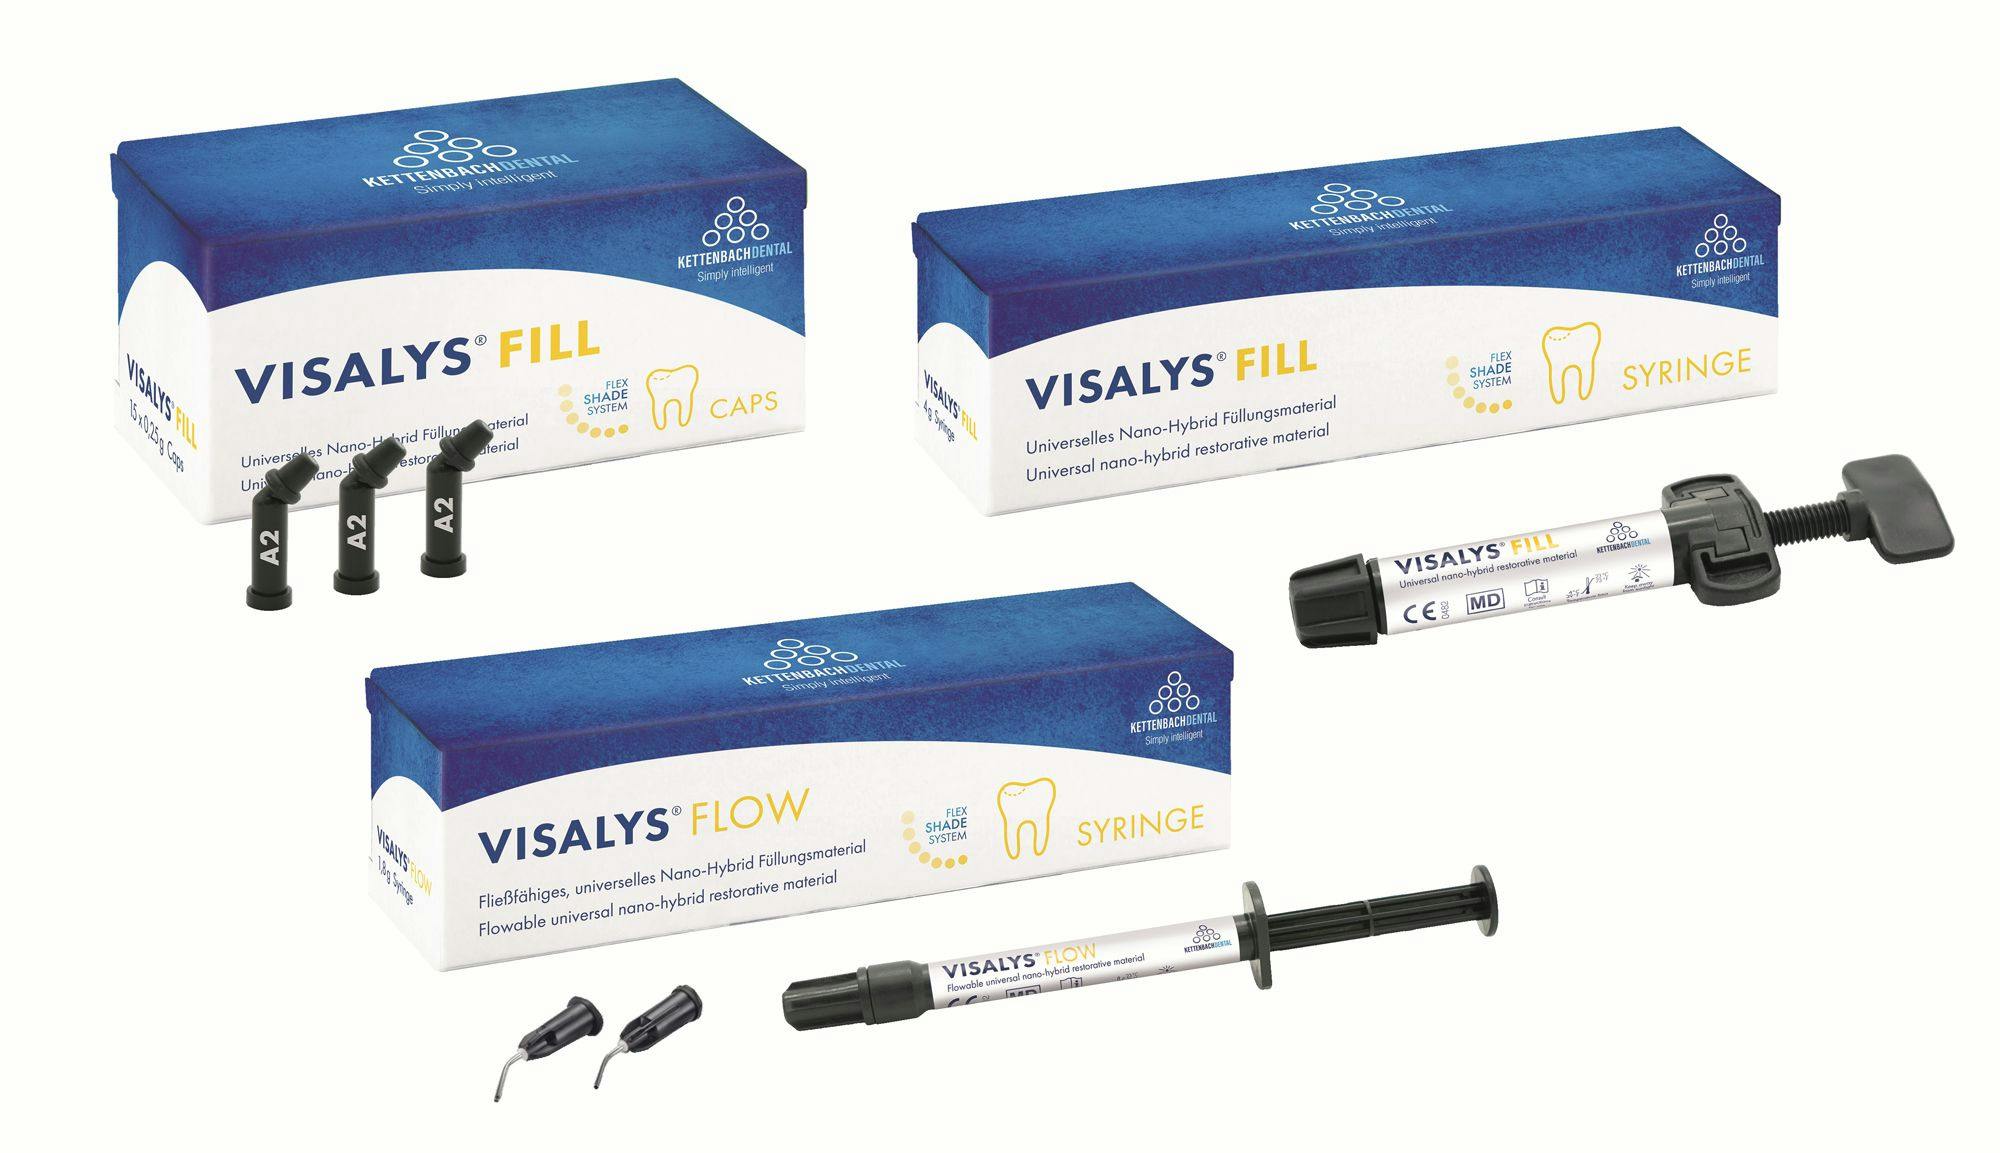 Kettenbach Launches New Visalys Fill and Visalys Flow Filling Composites | Image Credit: Kettenbach LP